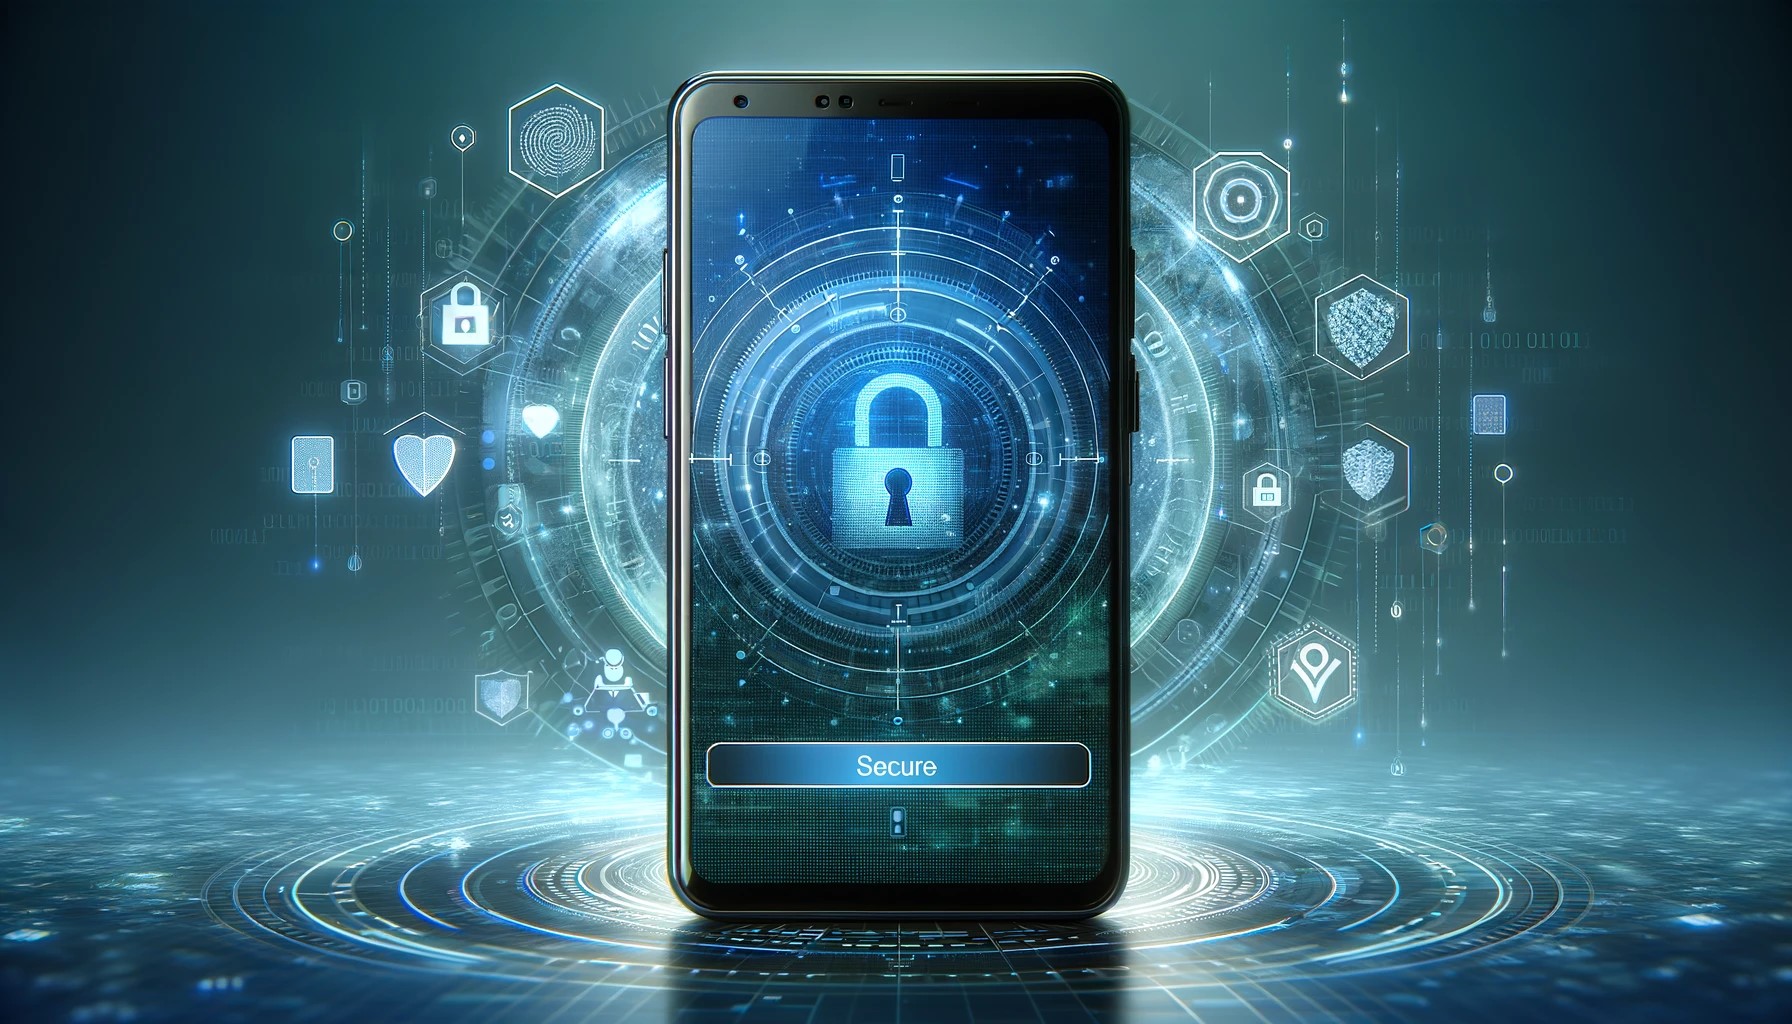 Cybereason introduces Cybereason Mobile Threat Defense